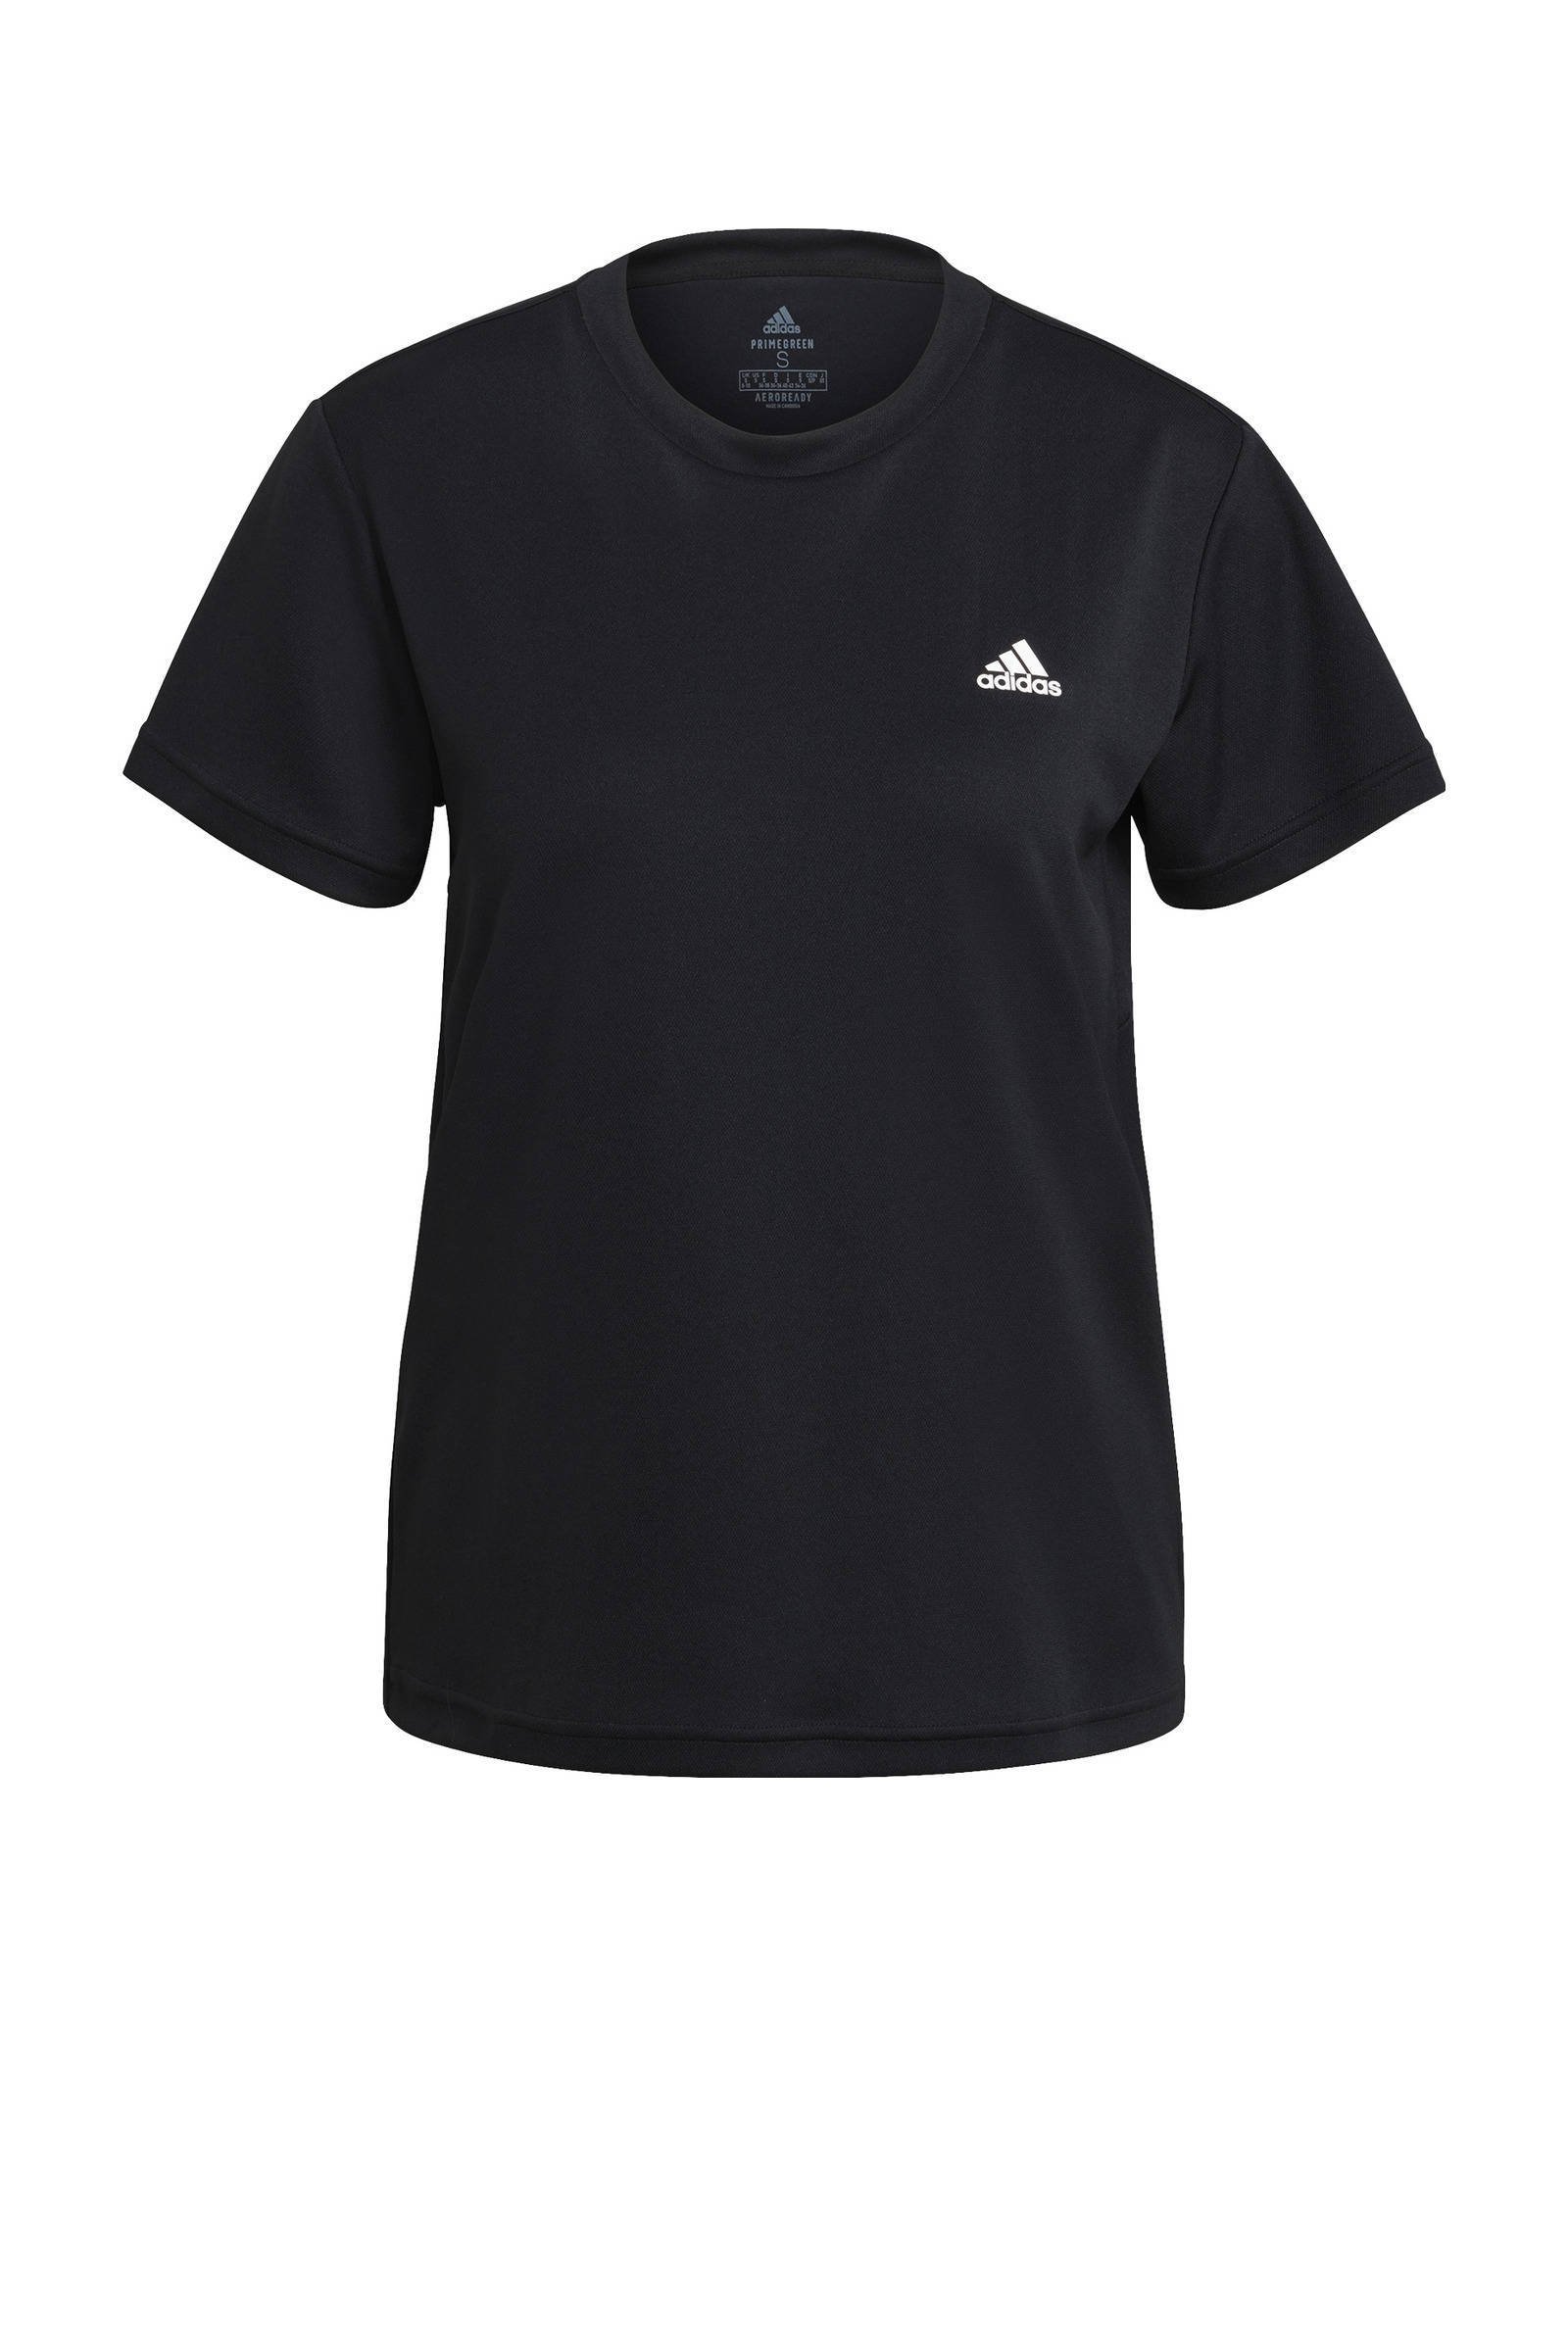 Adidas Aeroready Designed To Move Sport Dames T Shirts Black Katoen Canvas online kopen